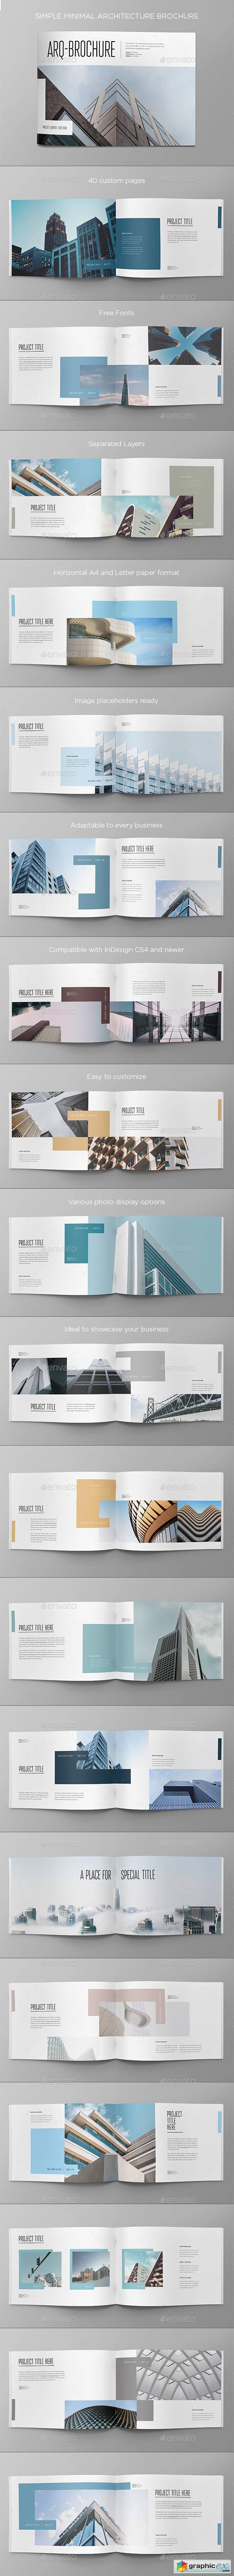 Simple Minimal Architecture Brochure